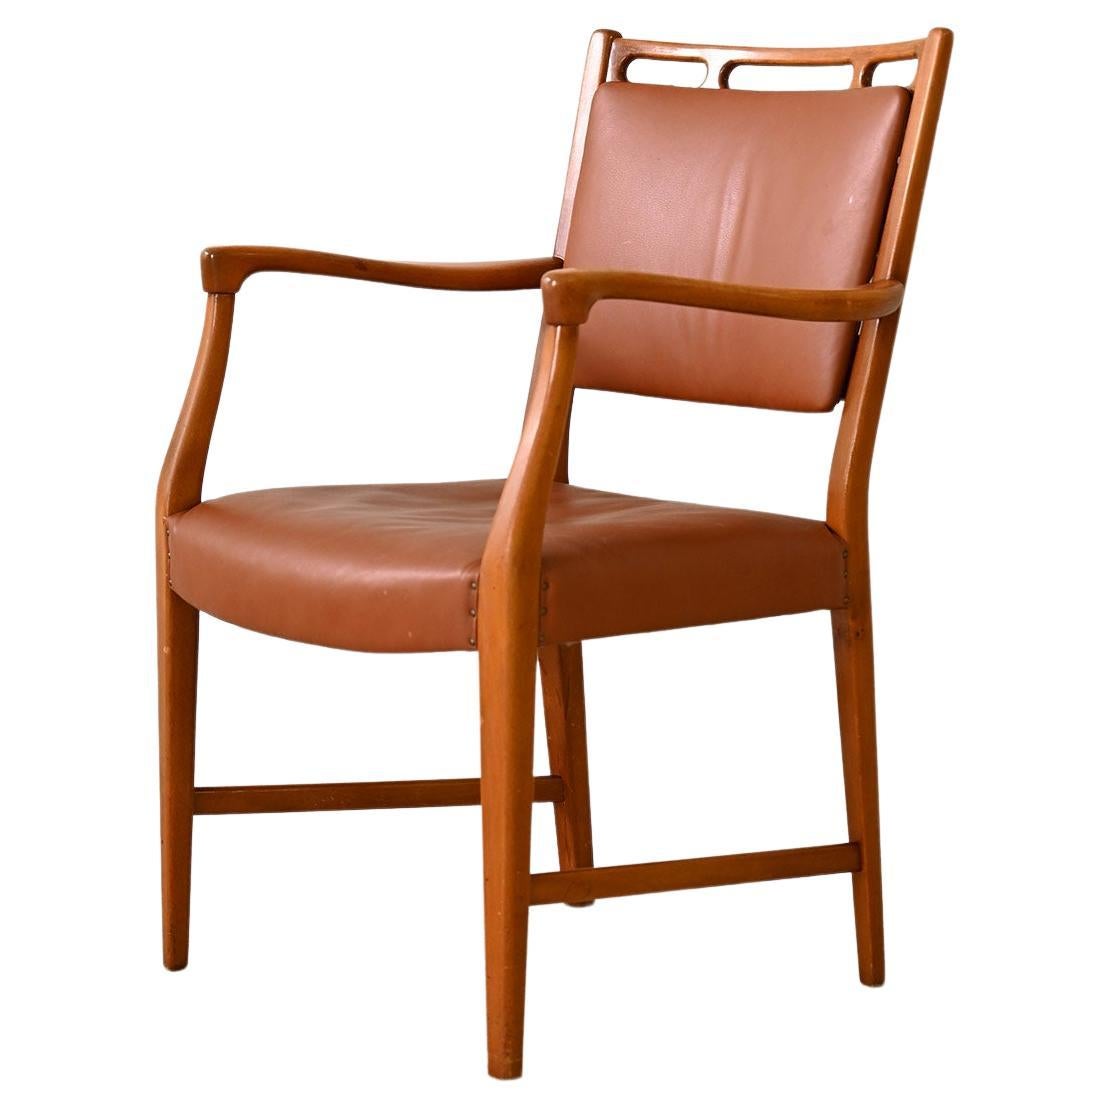 Vintage chair by David Rosén For Sale